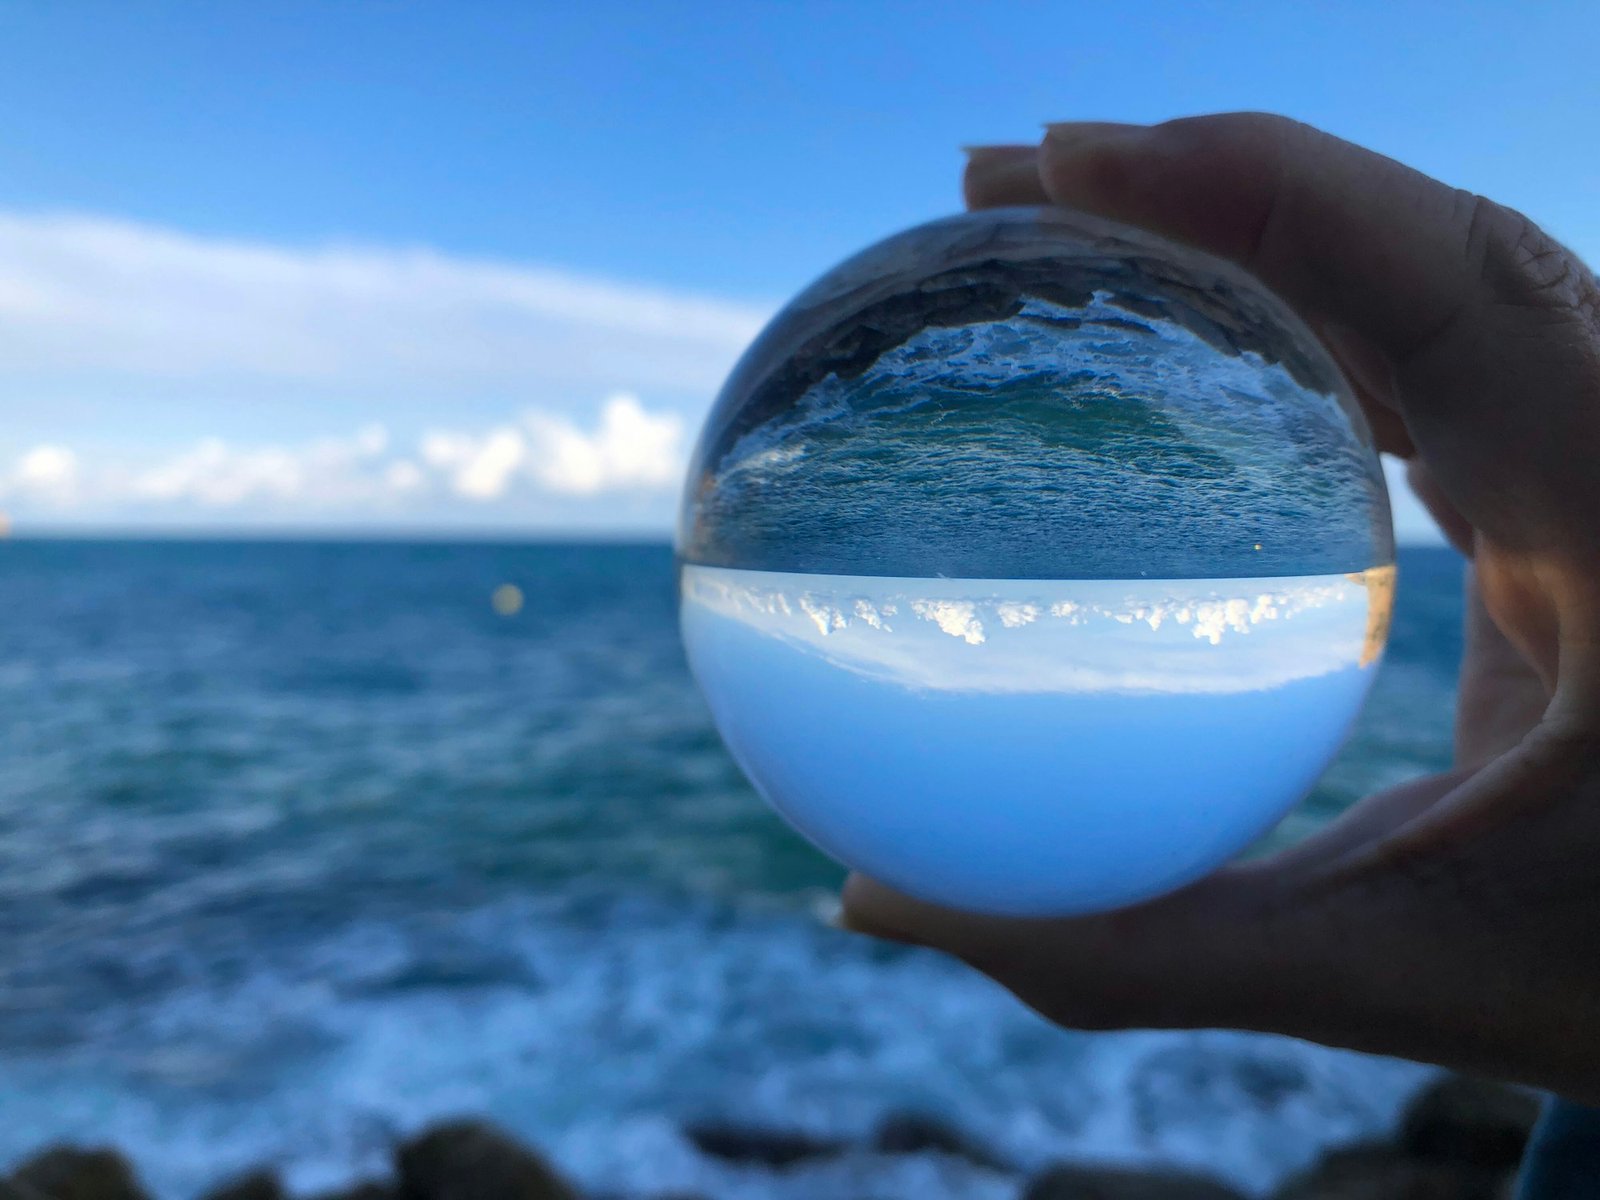 Seascape seen through a crystal ball